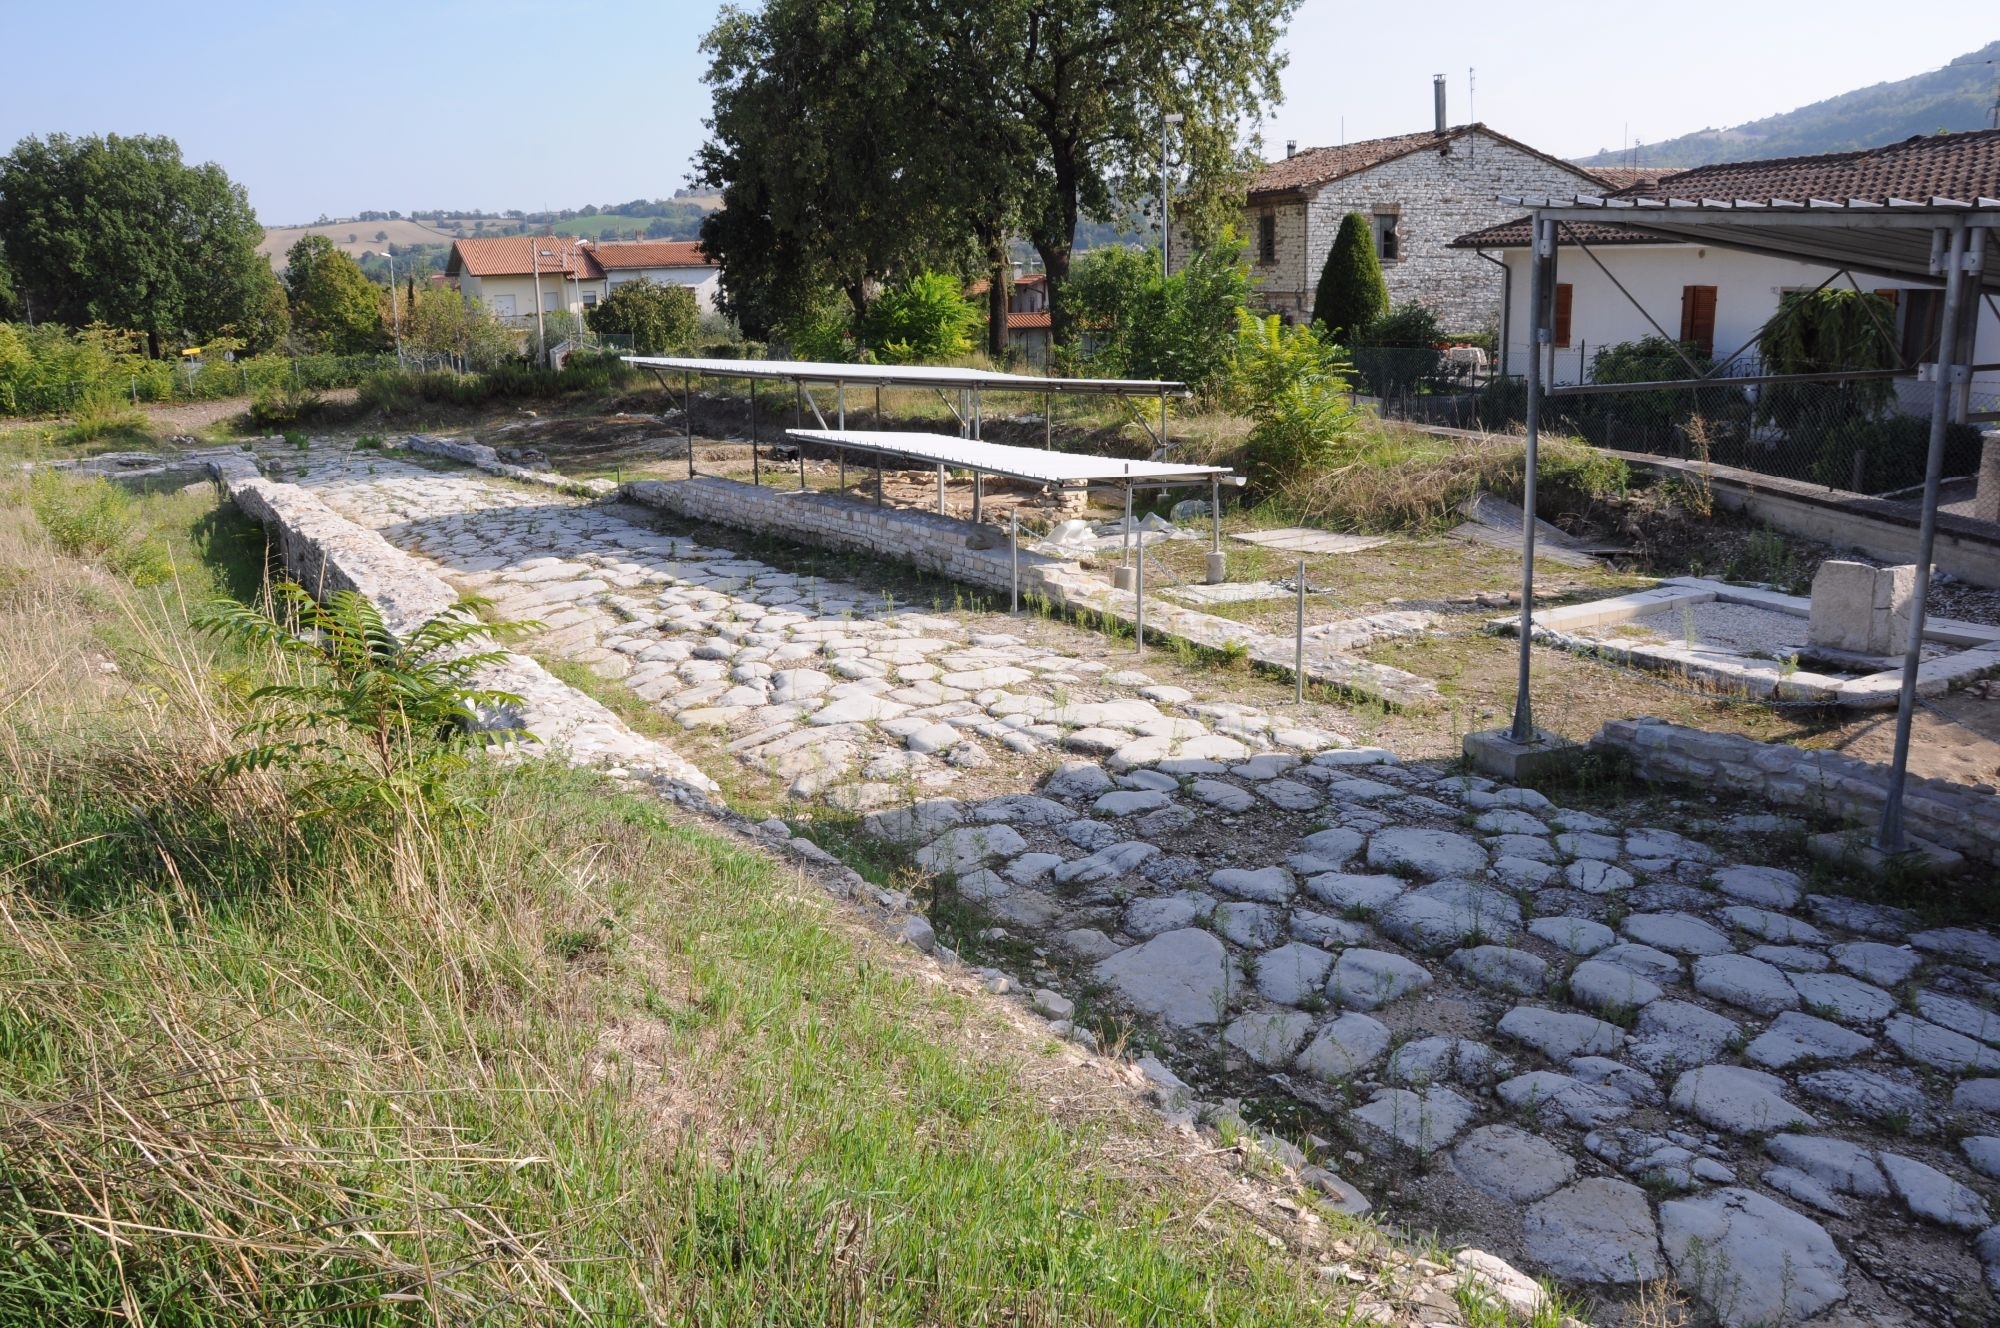 Forum Sempronii - il parco archeologico